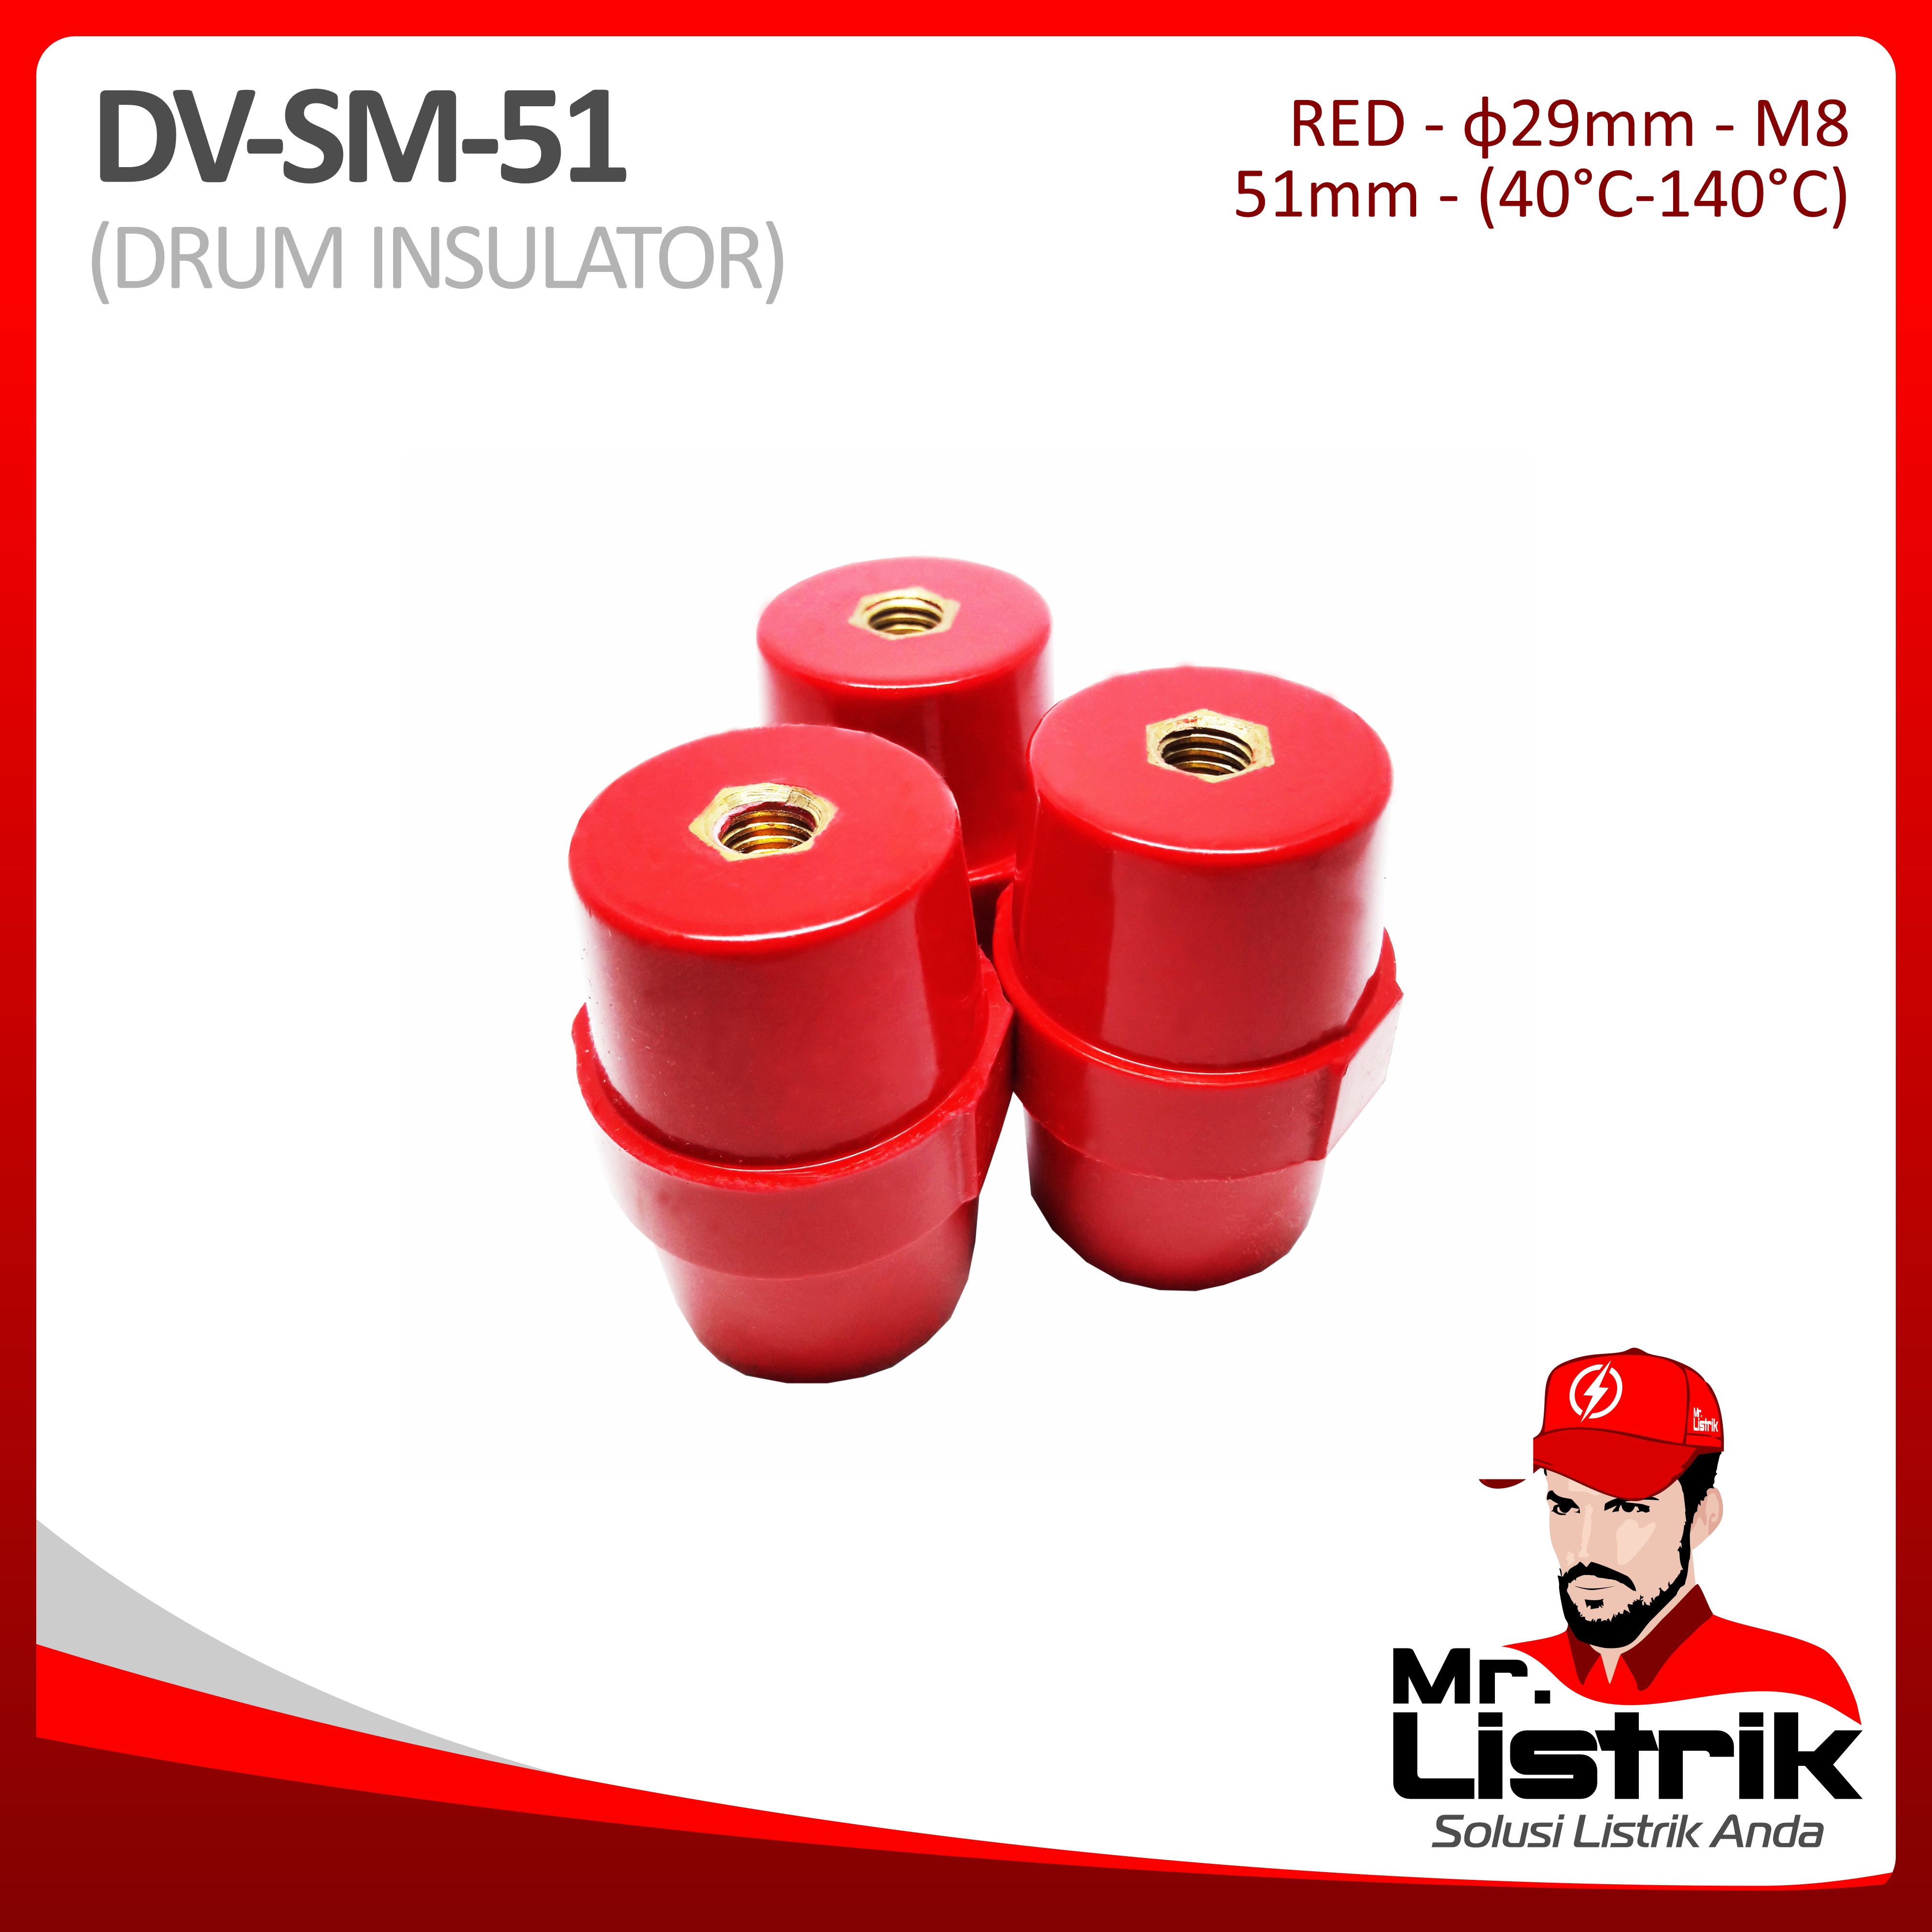 Drum Insulator Rekolit DV SM-51